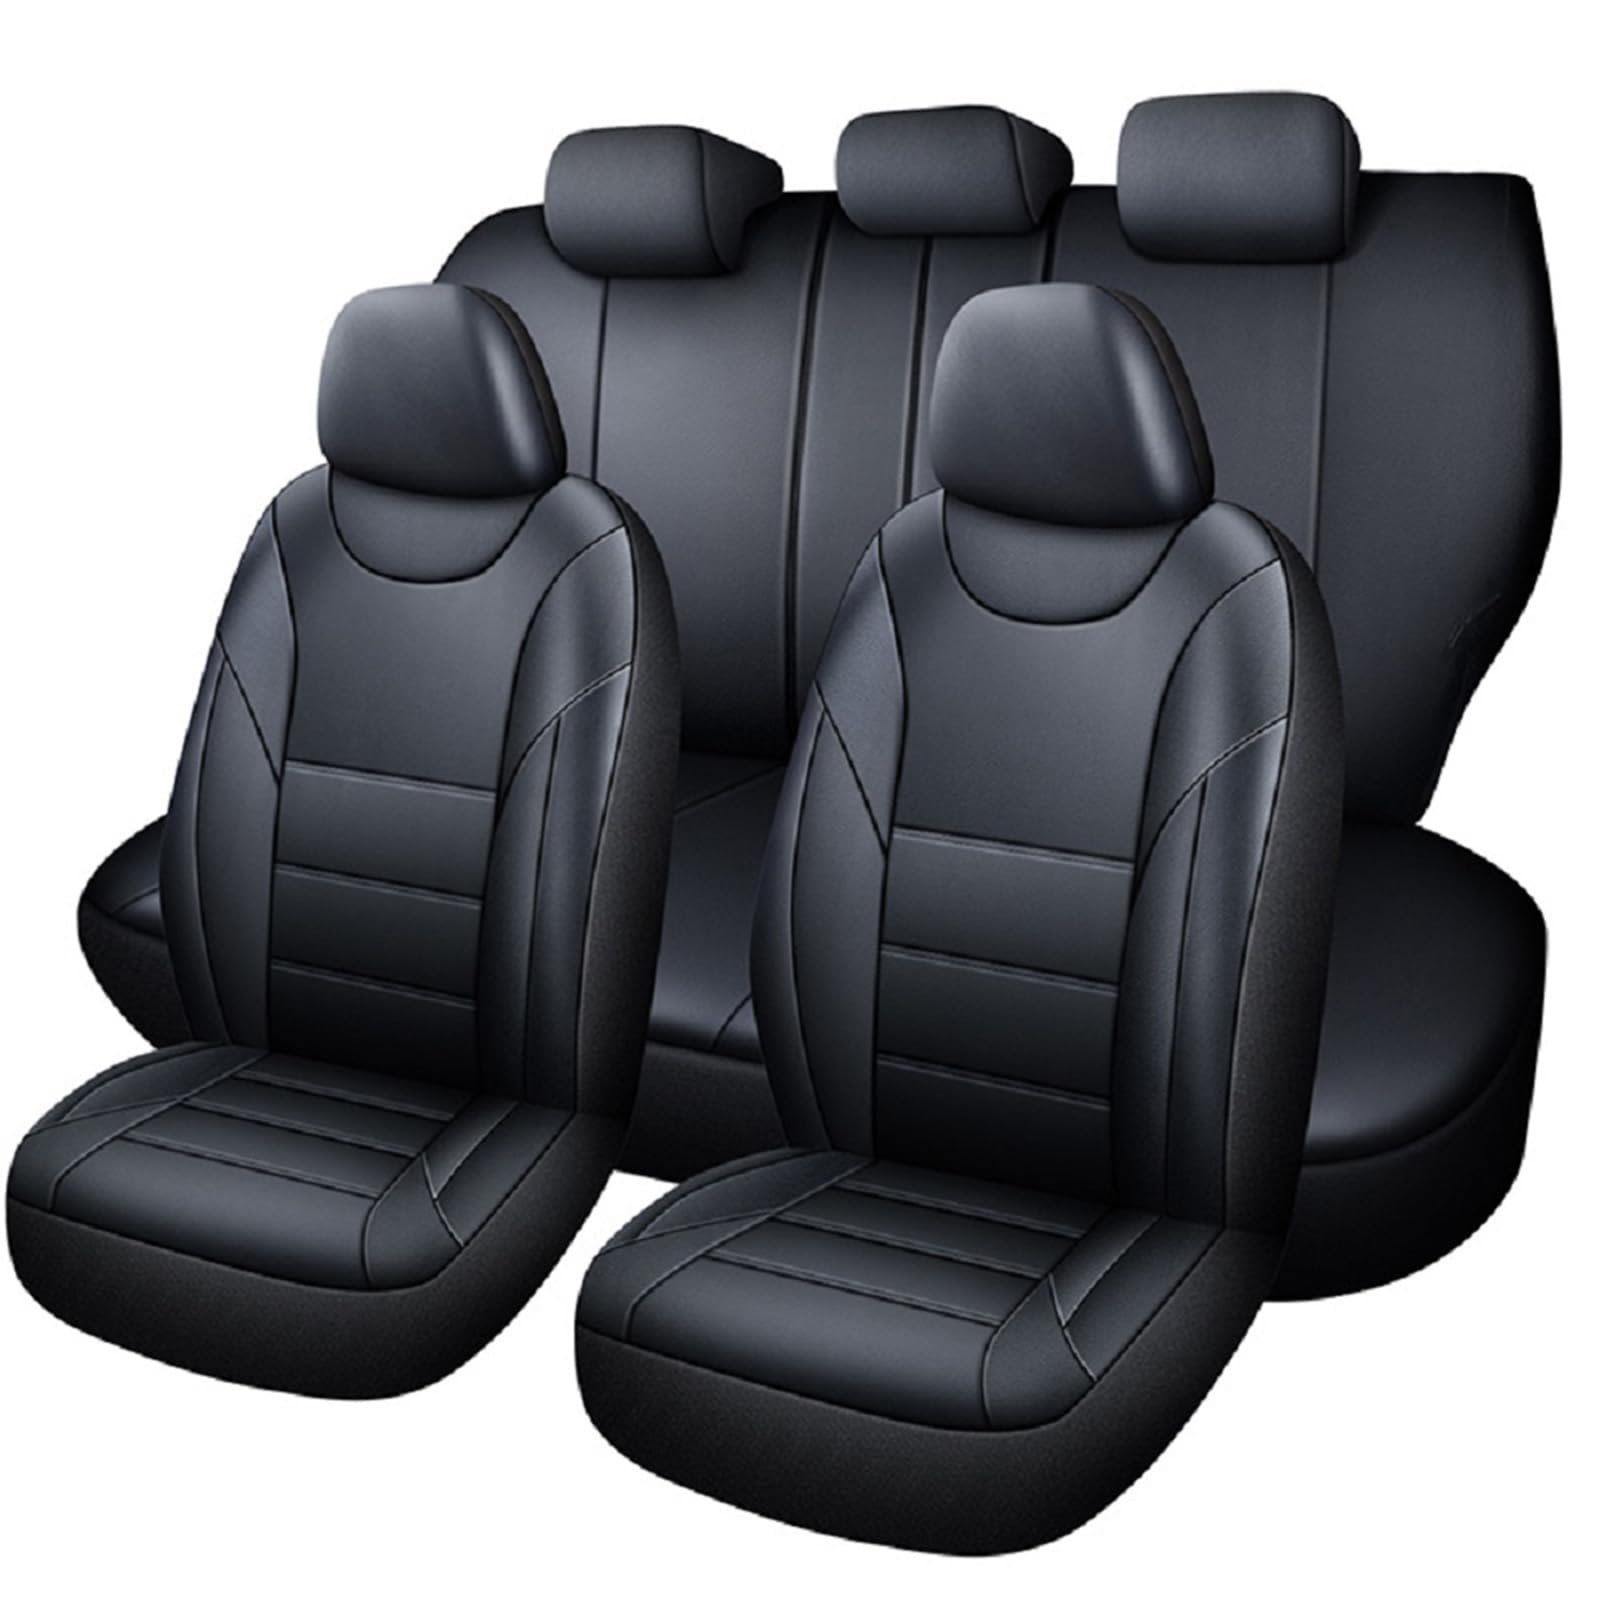 Chifeng Universal pu Leder Auto Sitzbezug Set Vordere Reihe Rücksitz Schutzabdeckungen Auto Interieur Zubehör für Audi A1 8X1 8XK A3 8p 8v 8l Sportback A4 8K2 B8 b6 b7 b8 A6 Q3 Q5 Q7 SQ5 von Chifeng